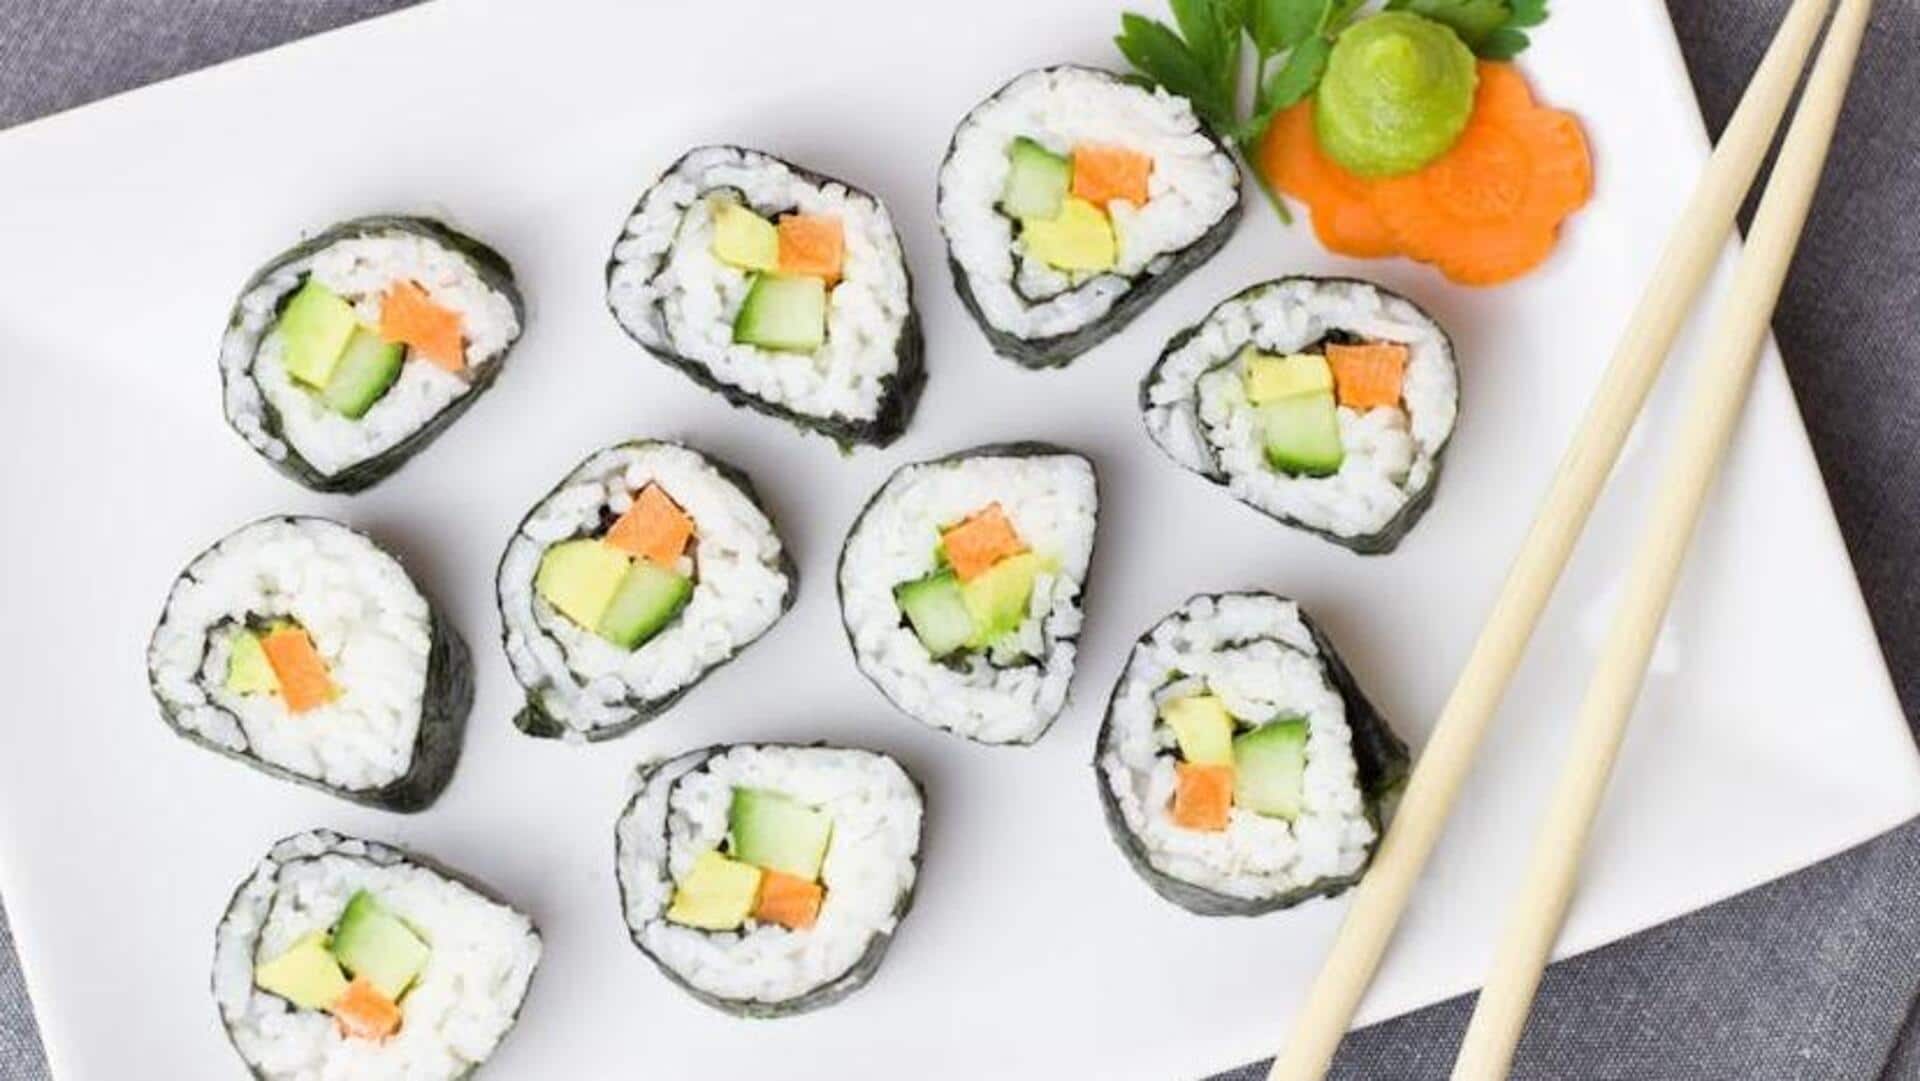 Check out this Japanese vegan sushi recipe